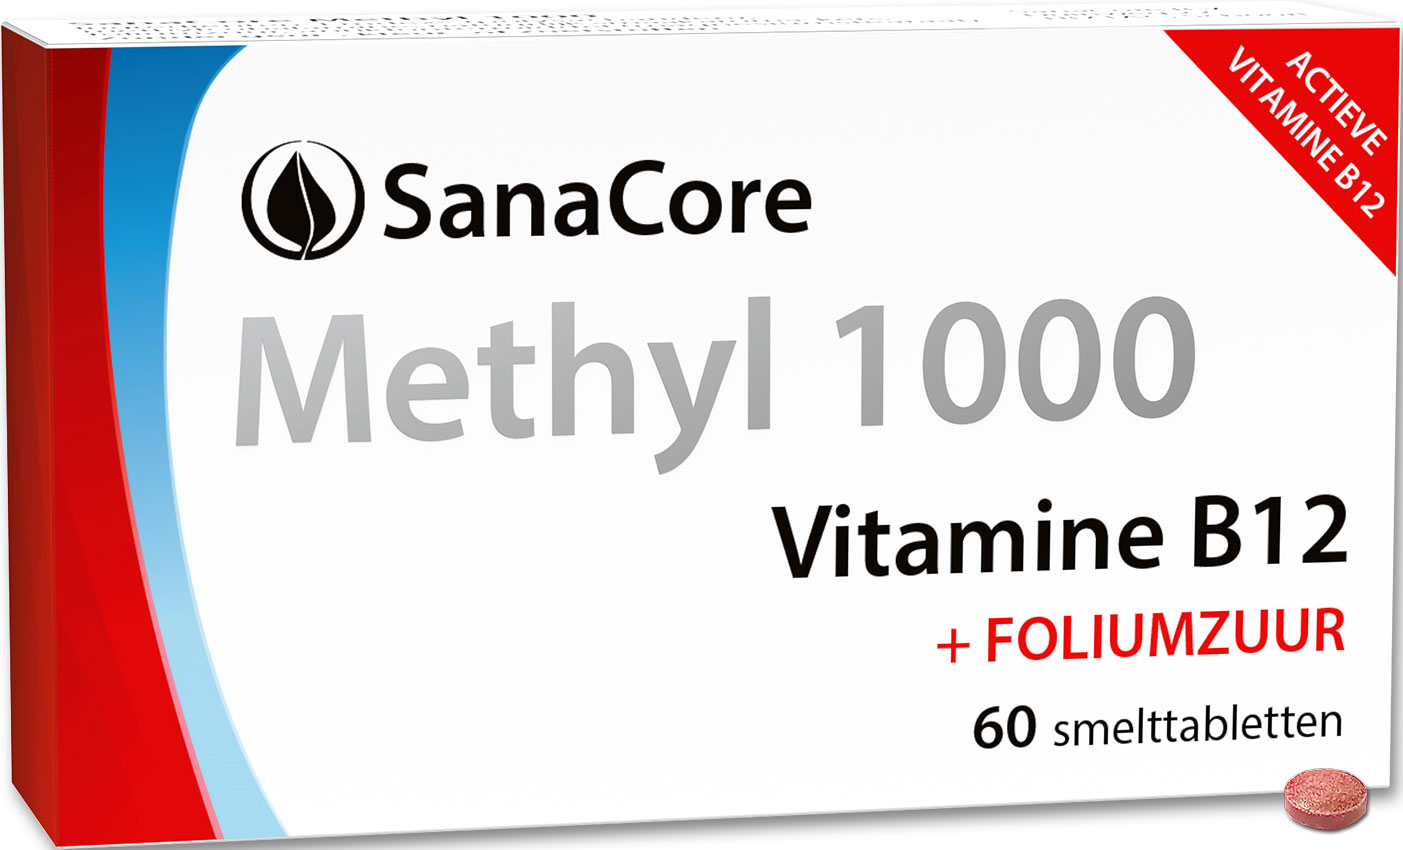 SanaCore Methyl 1000